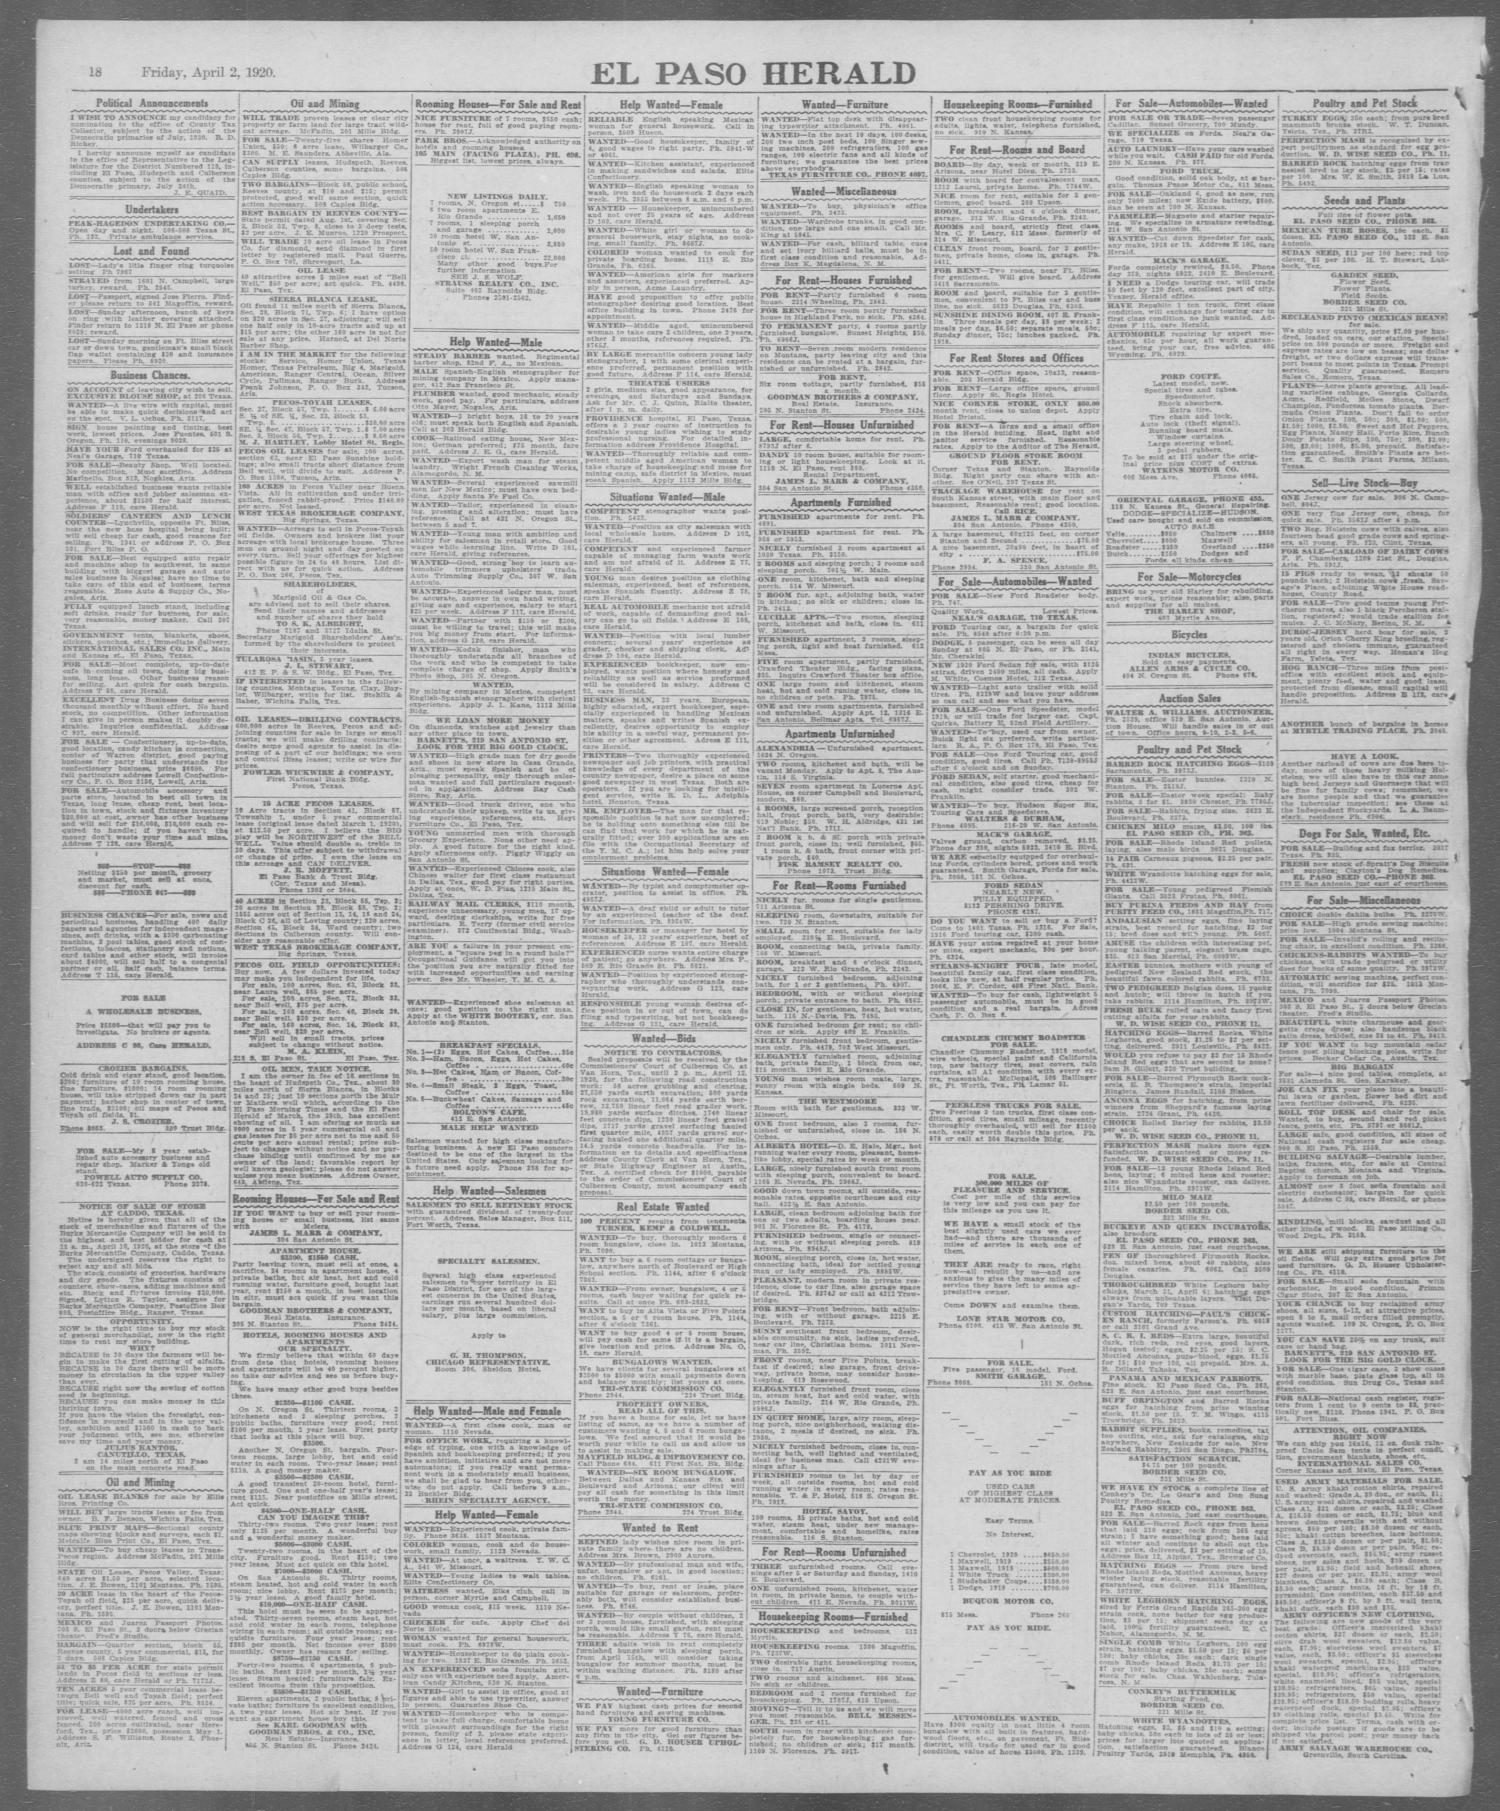 Pacon Plain White Newsprint Paper 18 x 24 Pack Of 500 Sheets - Office Depot